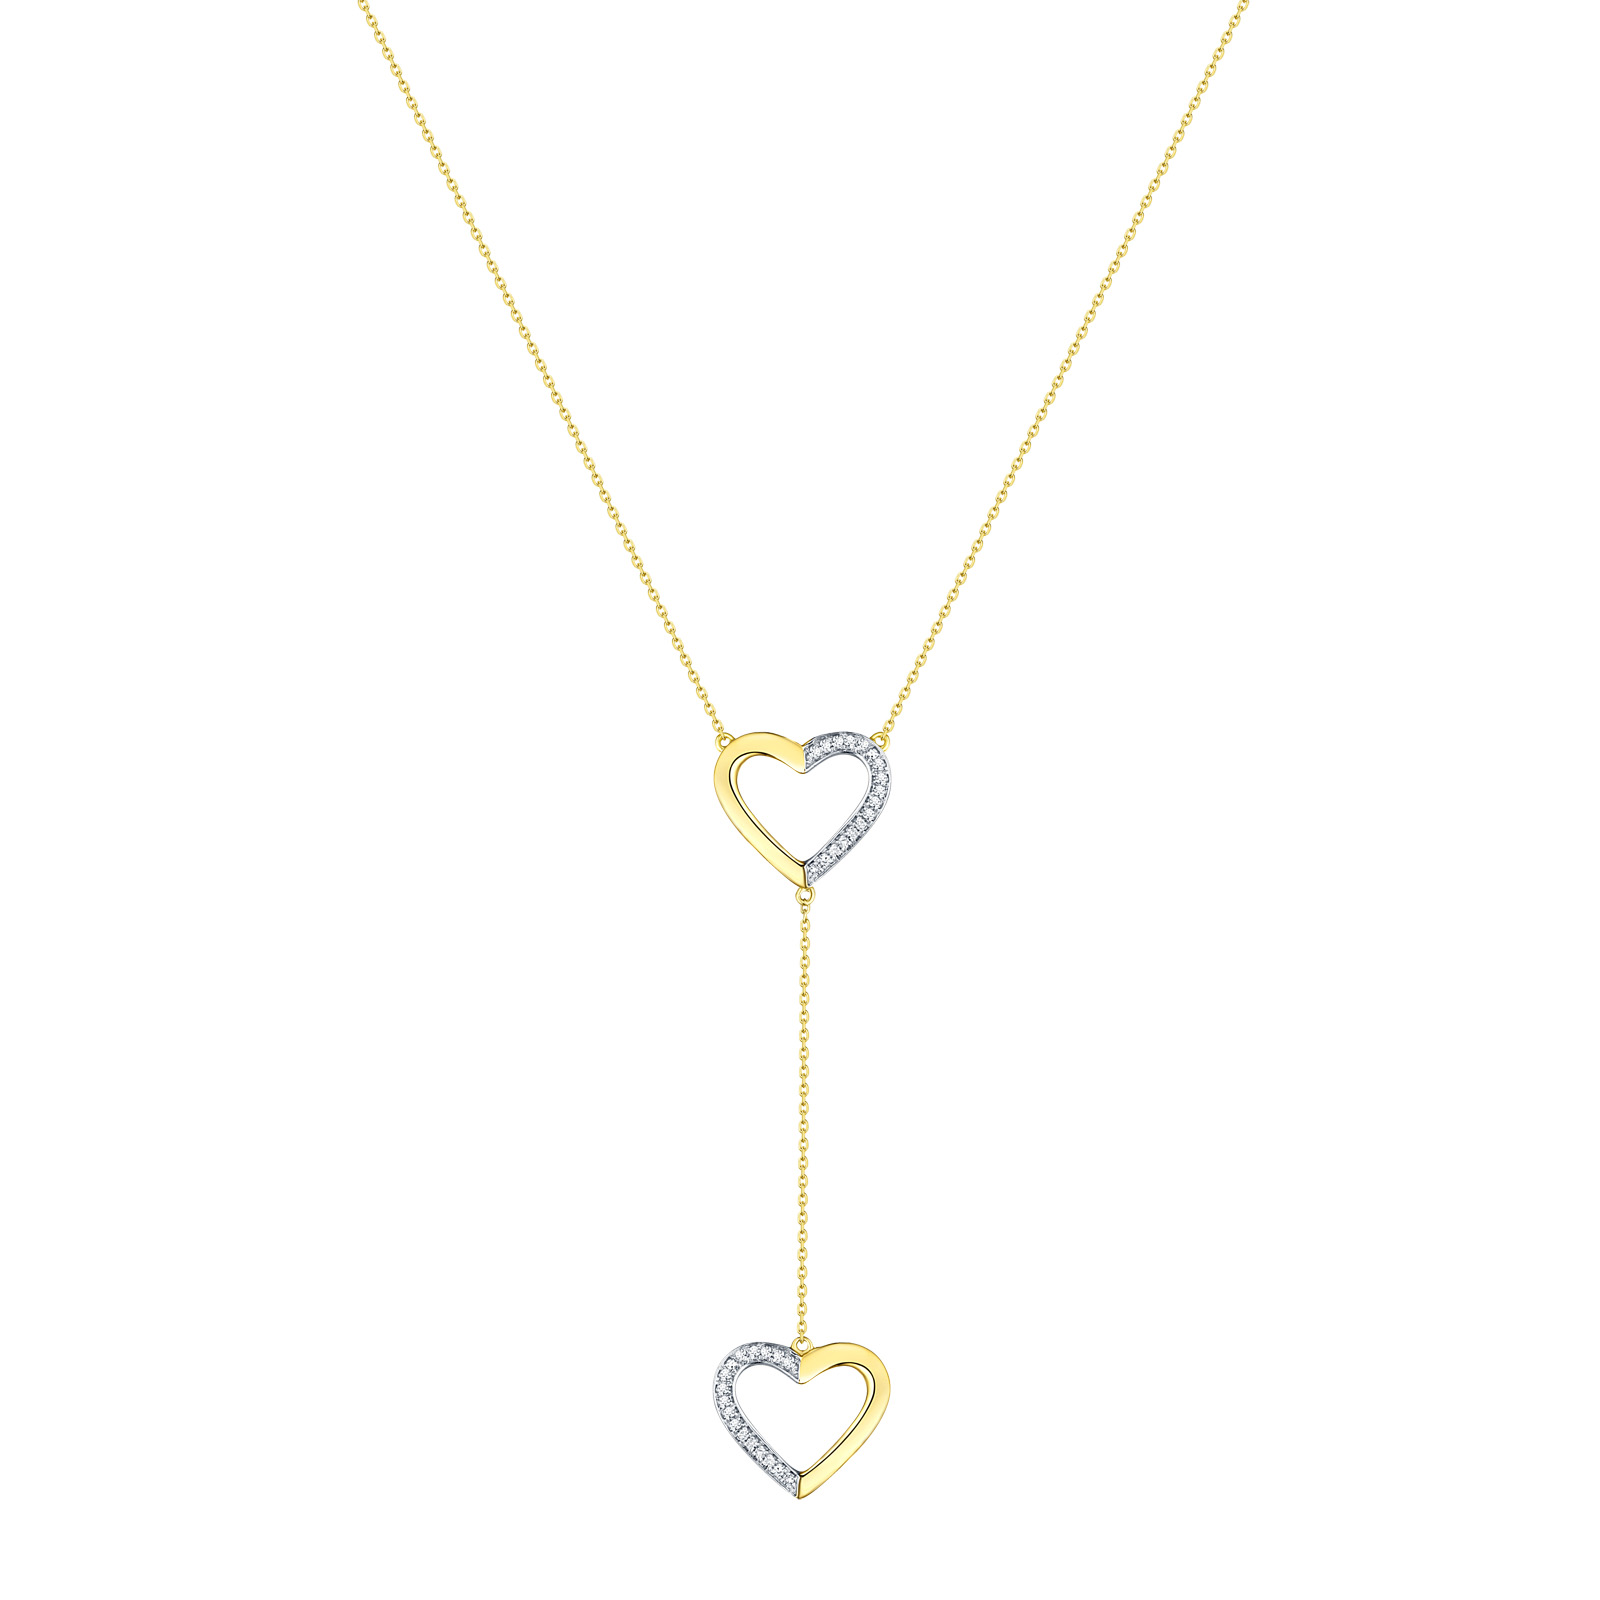 NL25891WHT- 14K Yellow Gold Diamond Necklace, 0.06 TCW